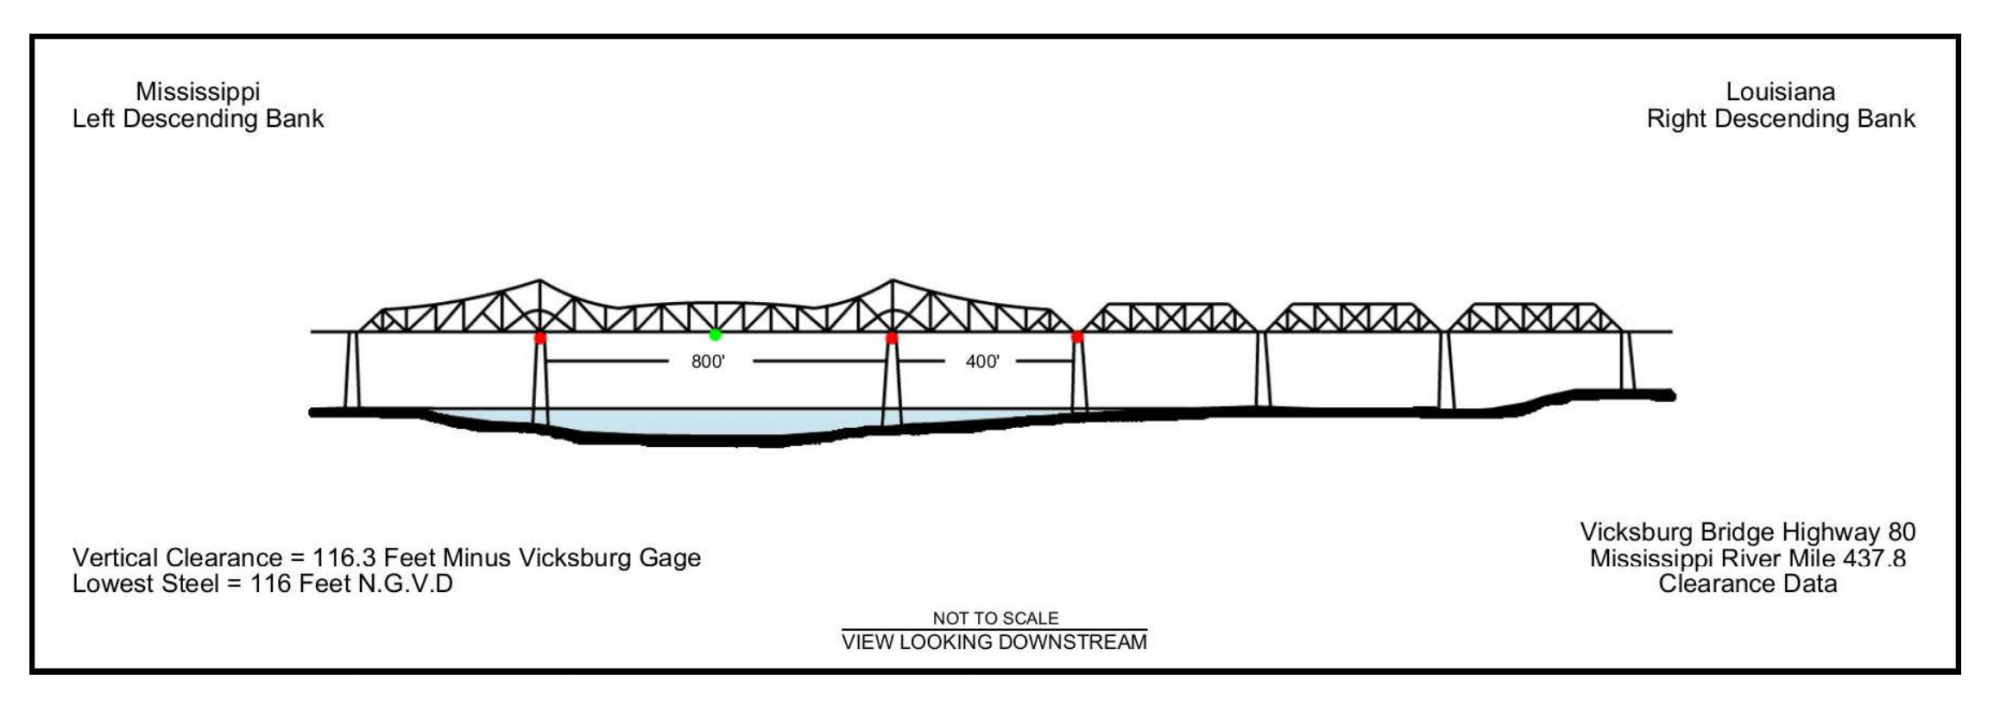 Vicksburg Railway and Hwy Bridge - Span 5 Clearances | Bridge Calculator LLC